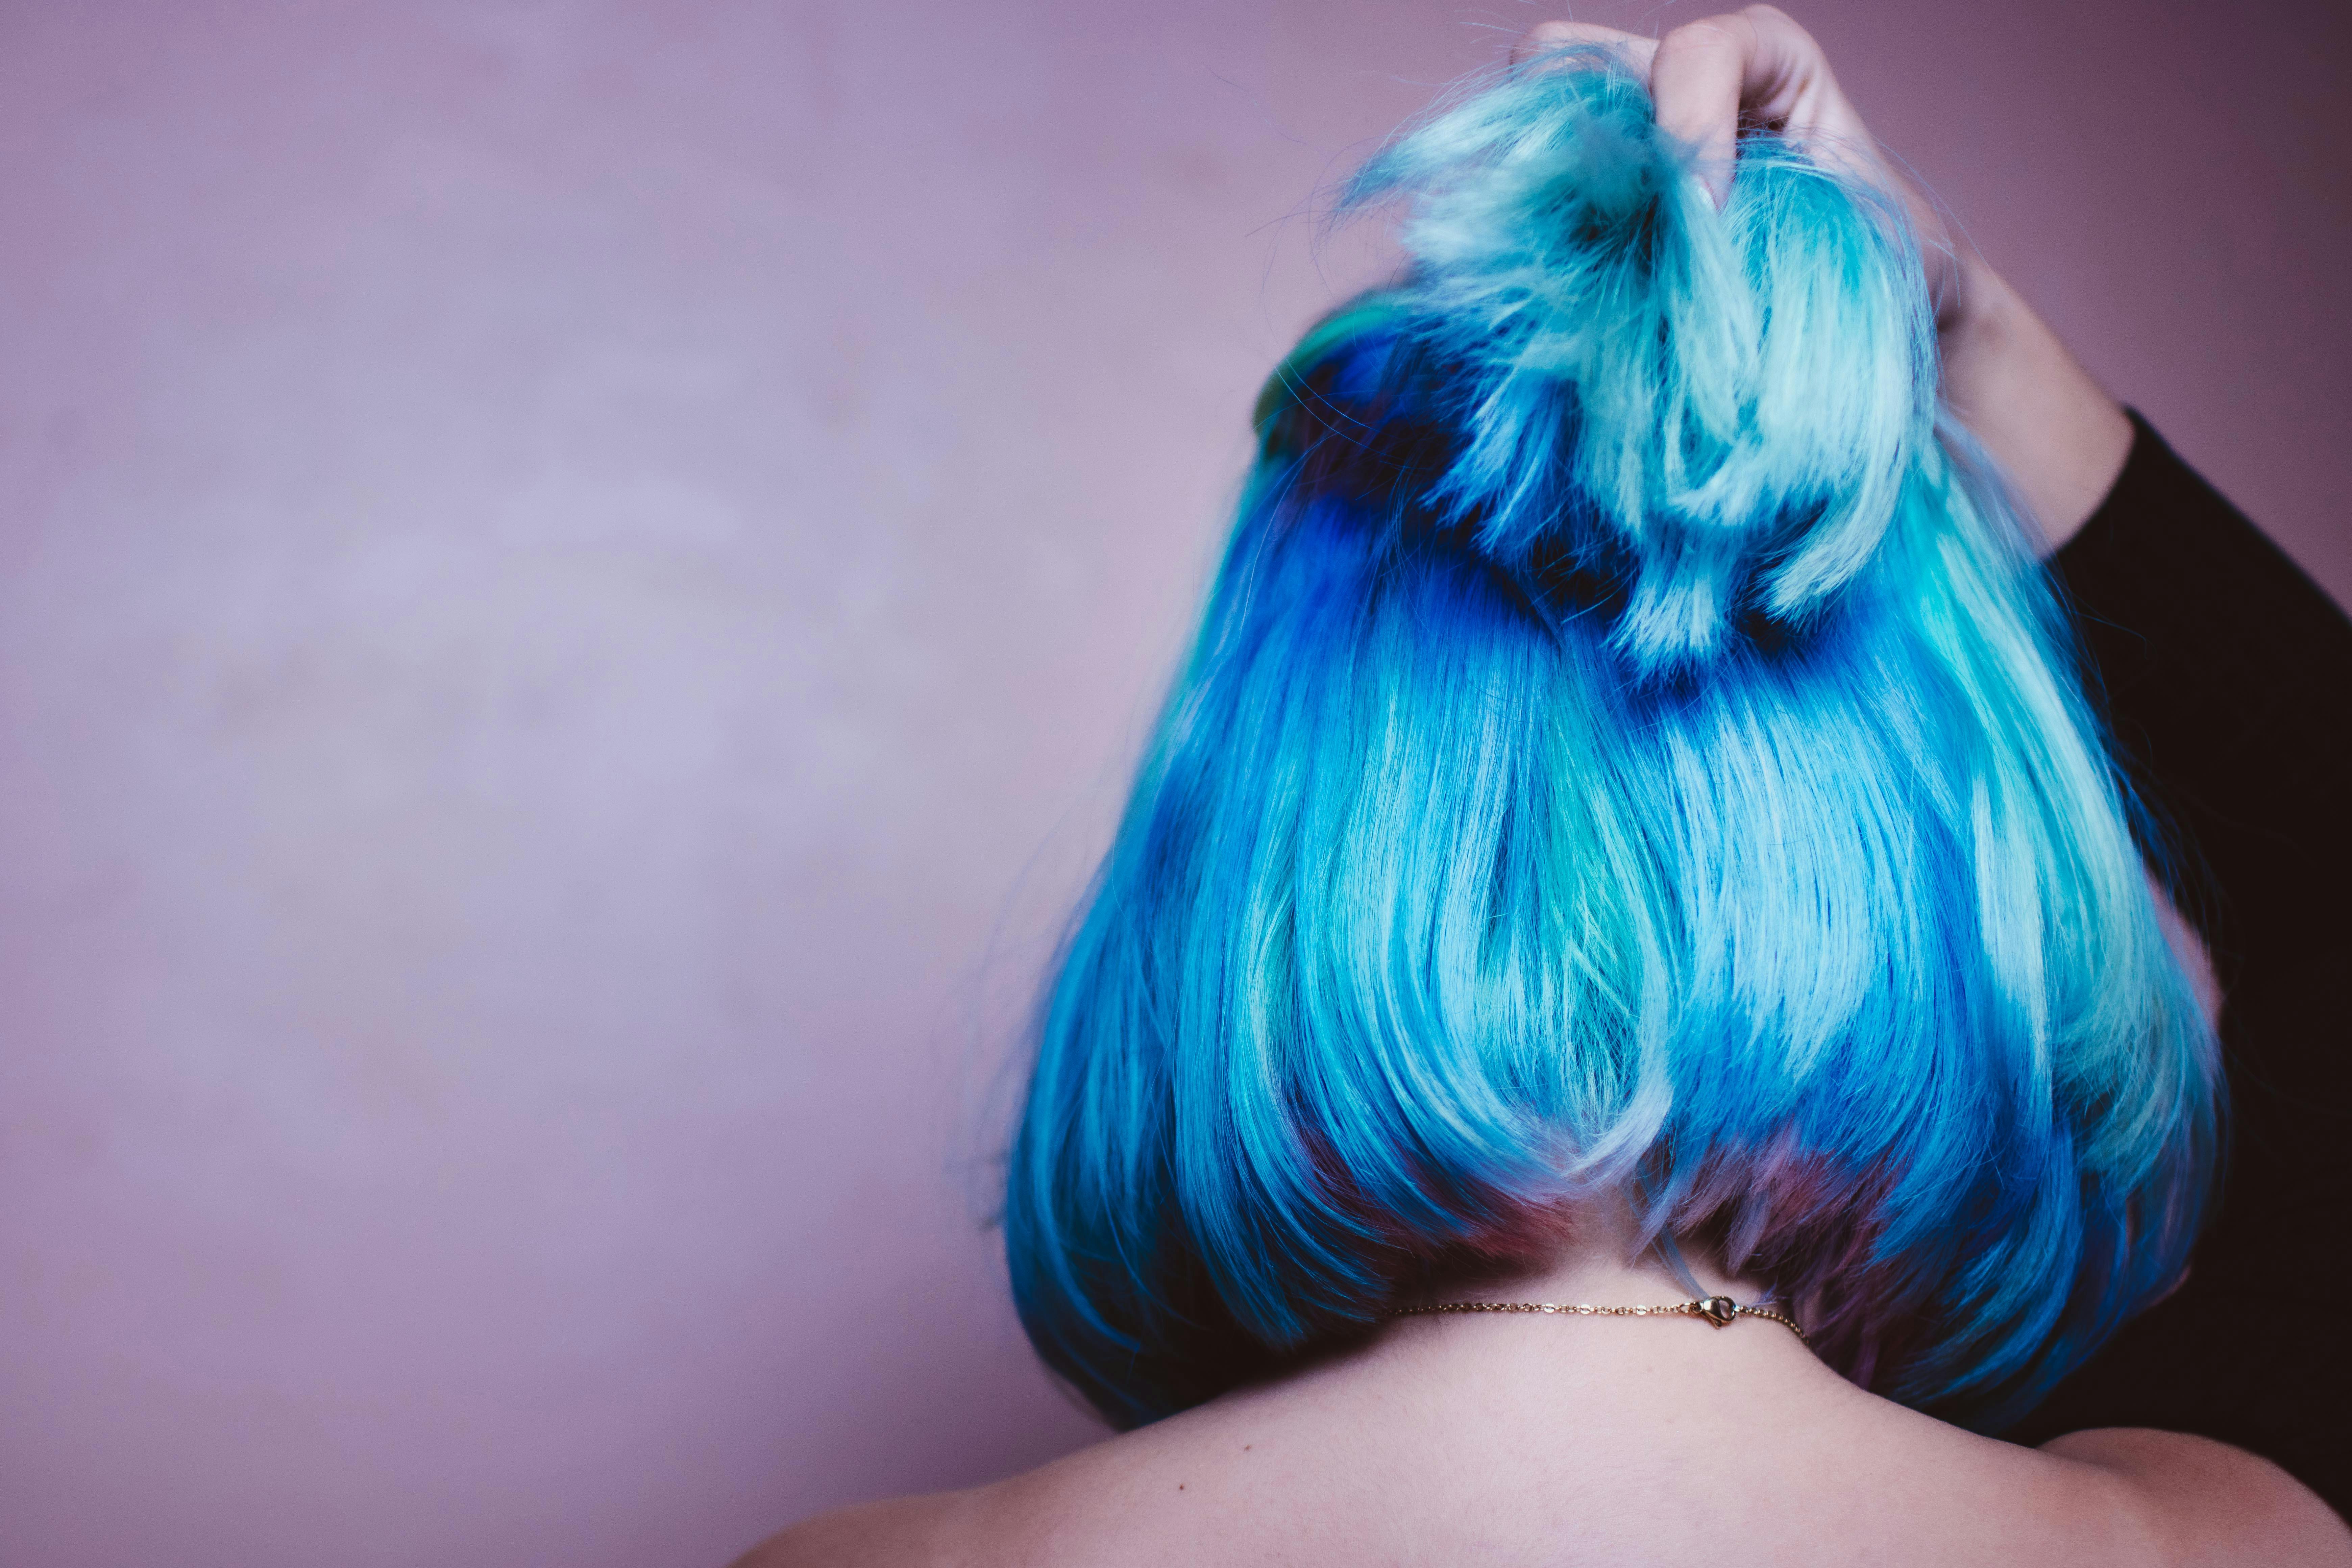 Blue hair and pale skin: 10 ideas about blue hair, pale skin, haircuts - wide 2